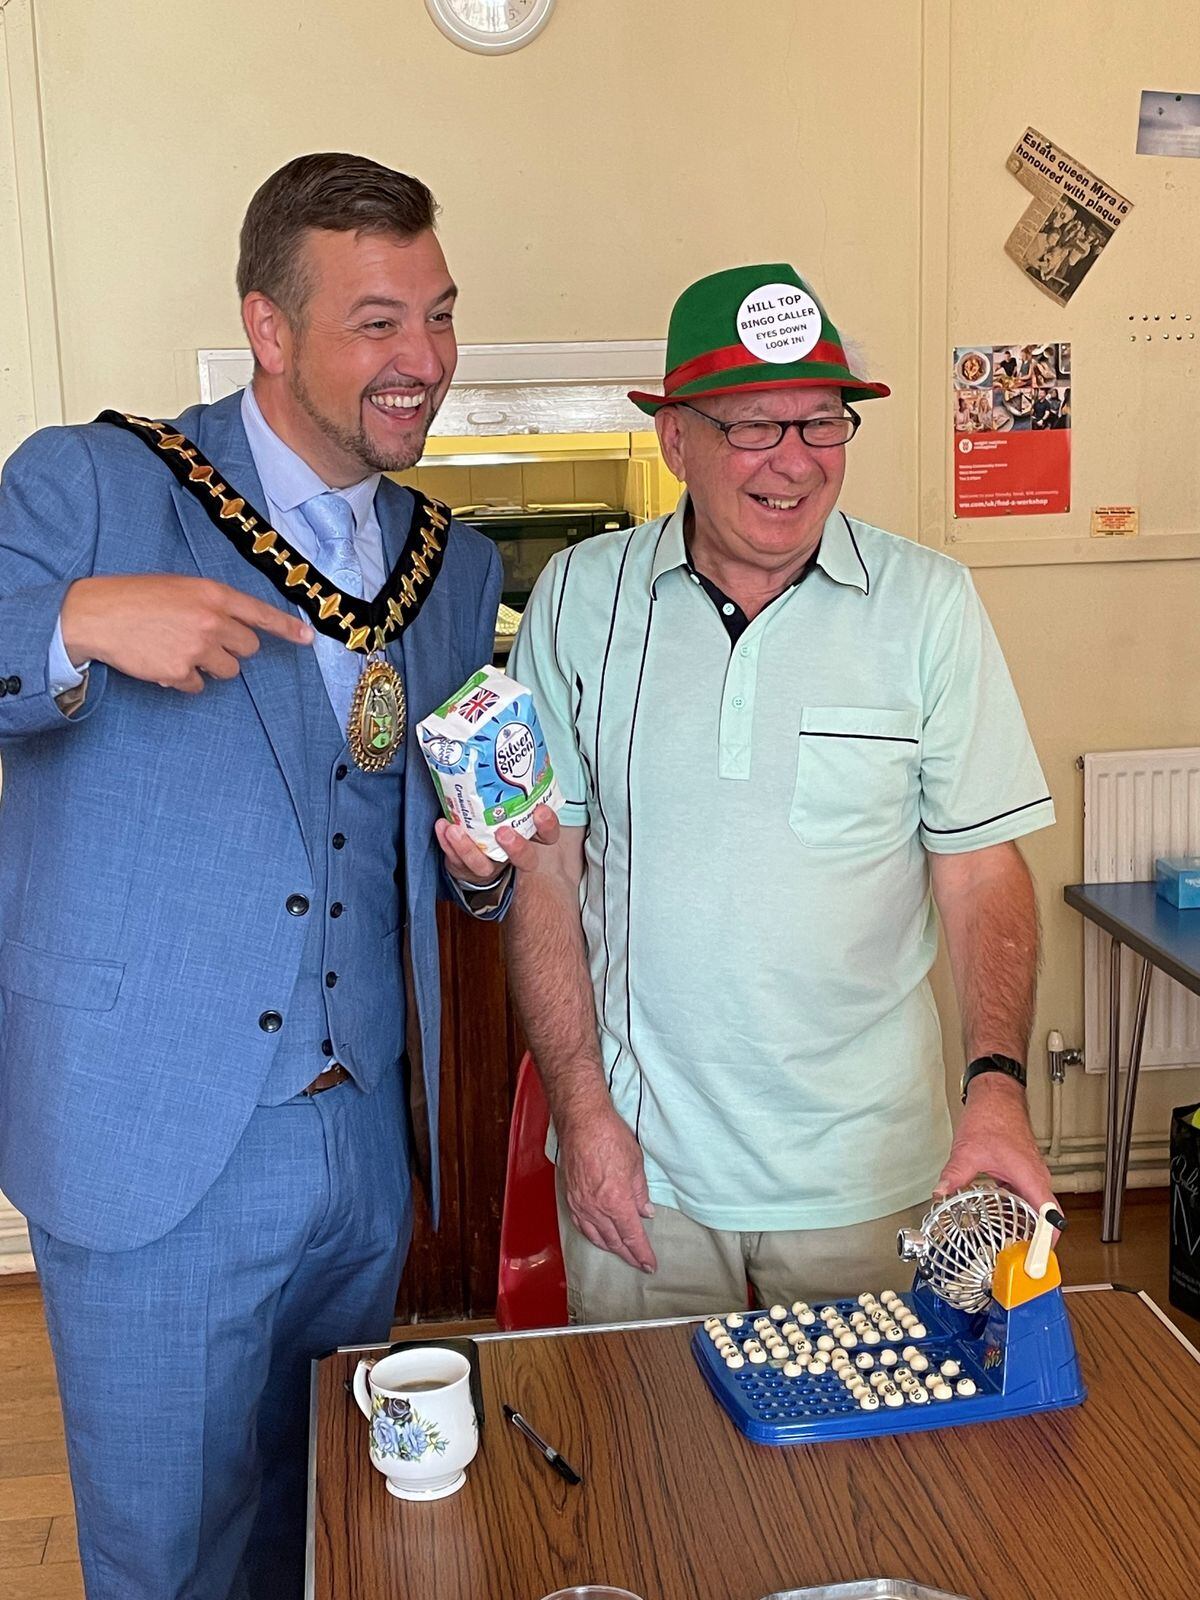 The mayor has bingo going on one of his visits